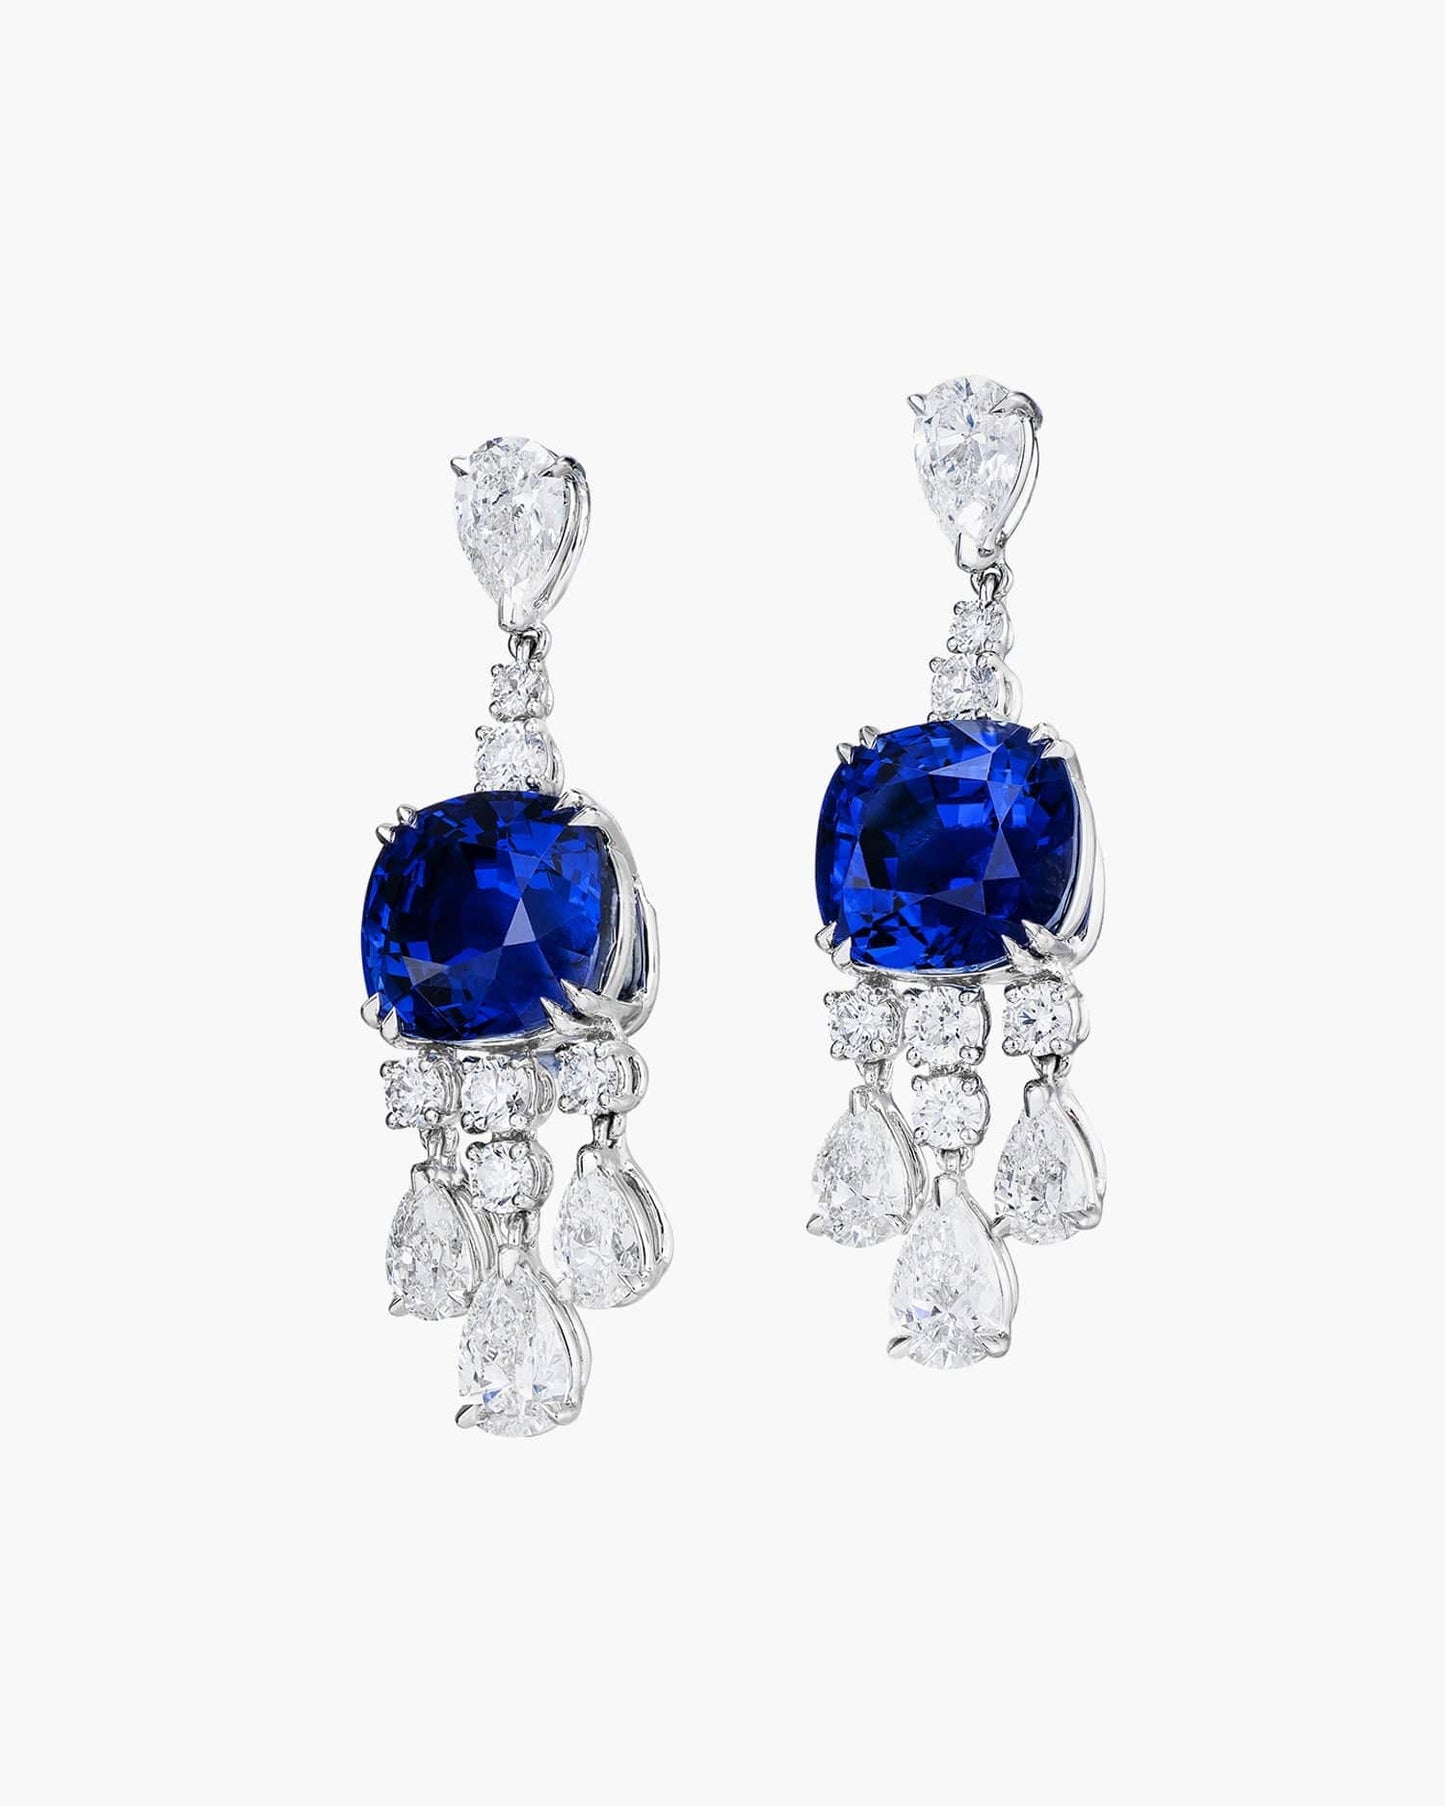 10.72 carat Cushion Cut Ceylon Sapphire and Diamond Earrings